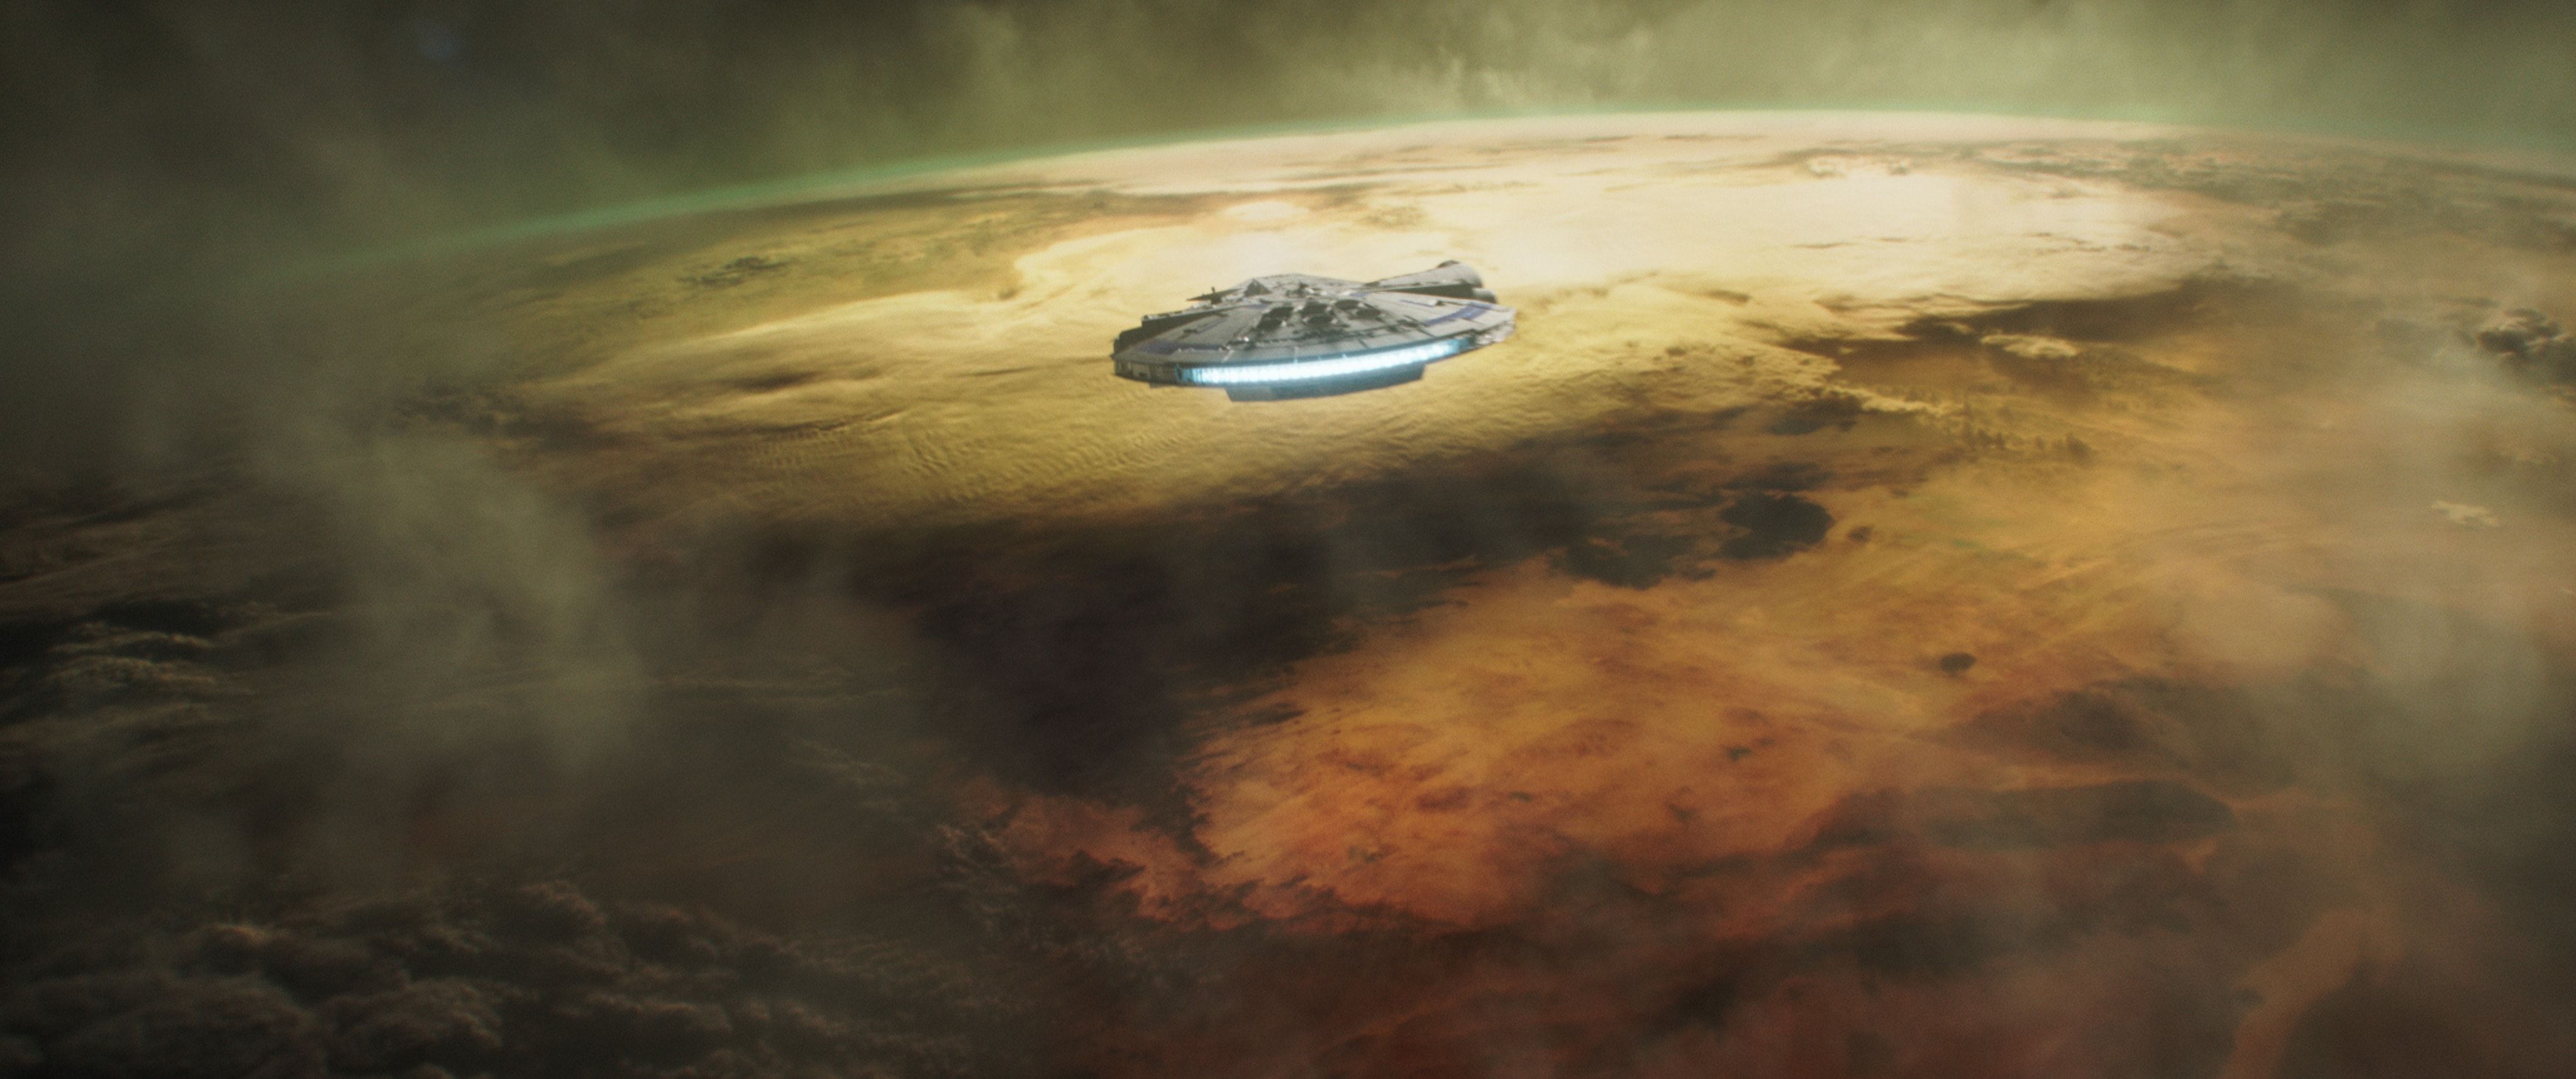 Millennium Falcon Movie Planet Sci Fi Solo A Star Wars Story Space Spaceship Star Wars 4096x1716